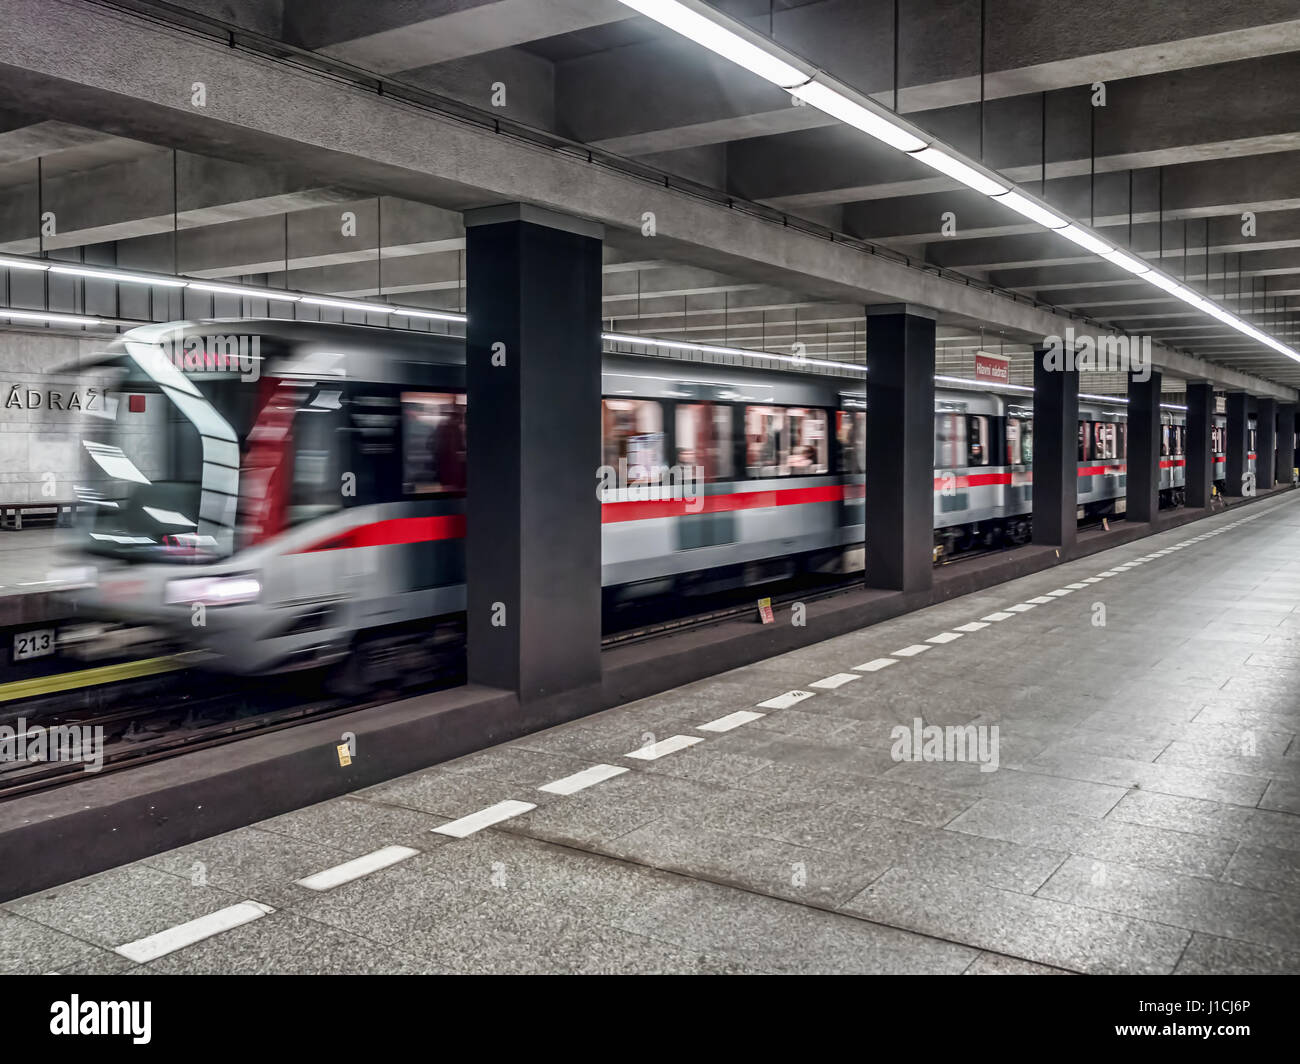 Praga, Repubblica Ceca - 5 Marzo 2017: Praga metropolitana treno lasciando la piattaforma Foto Stock